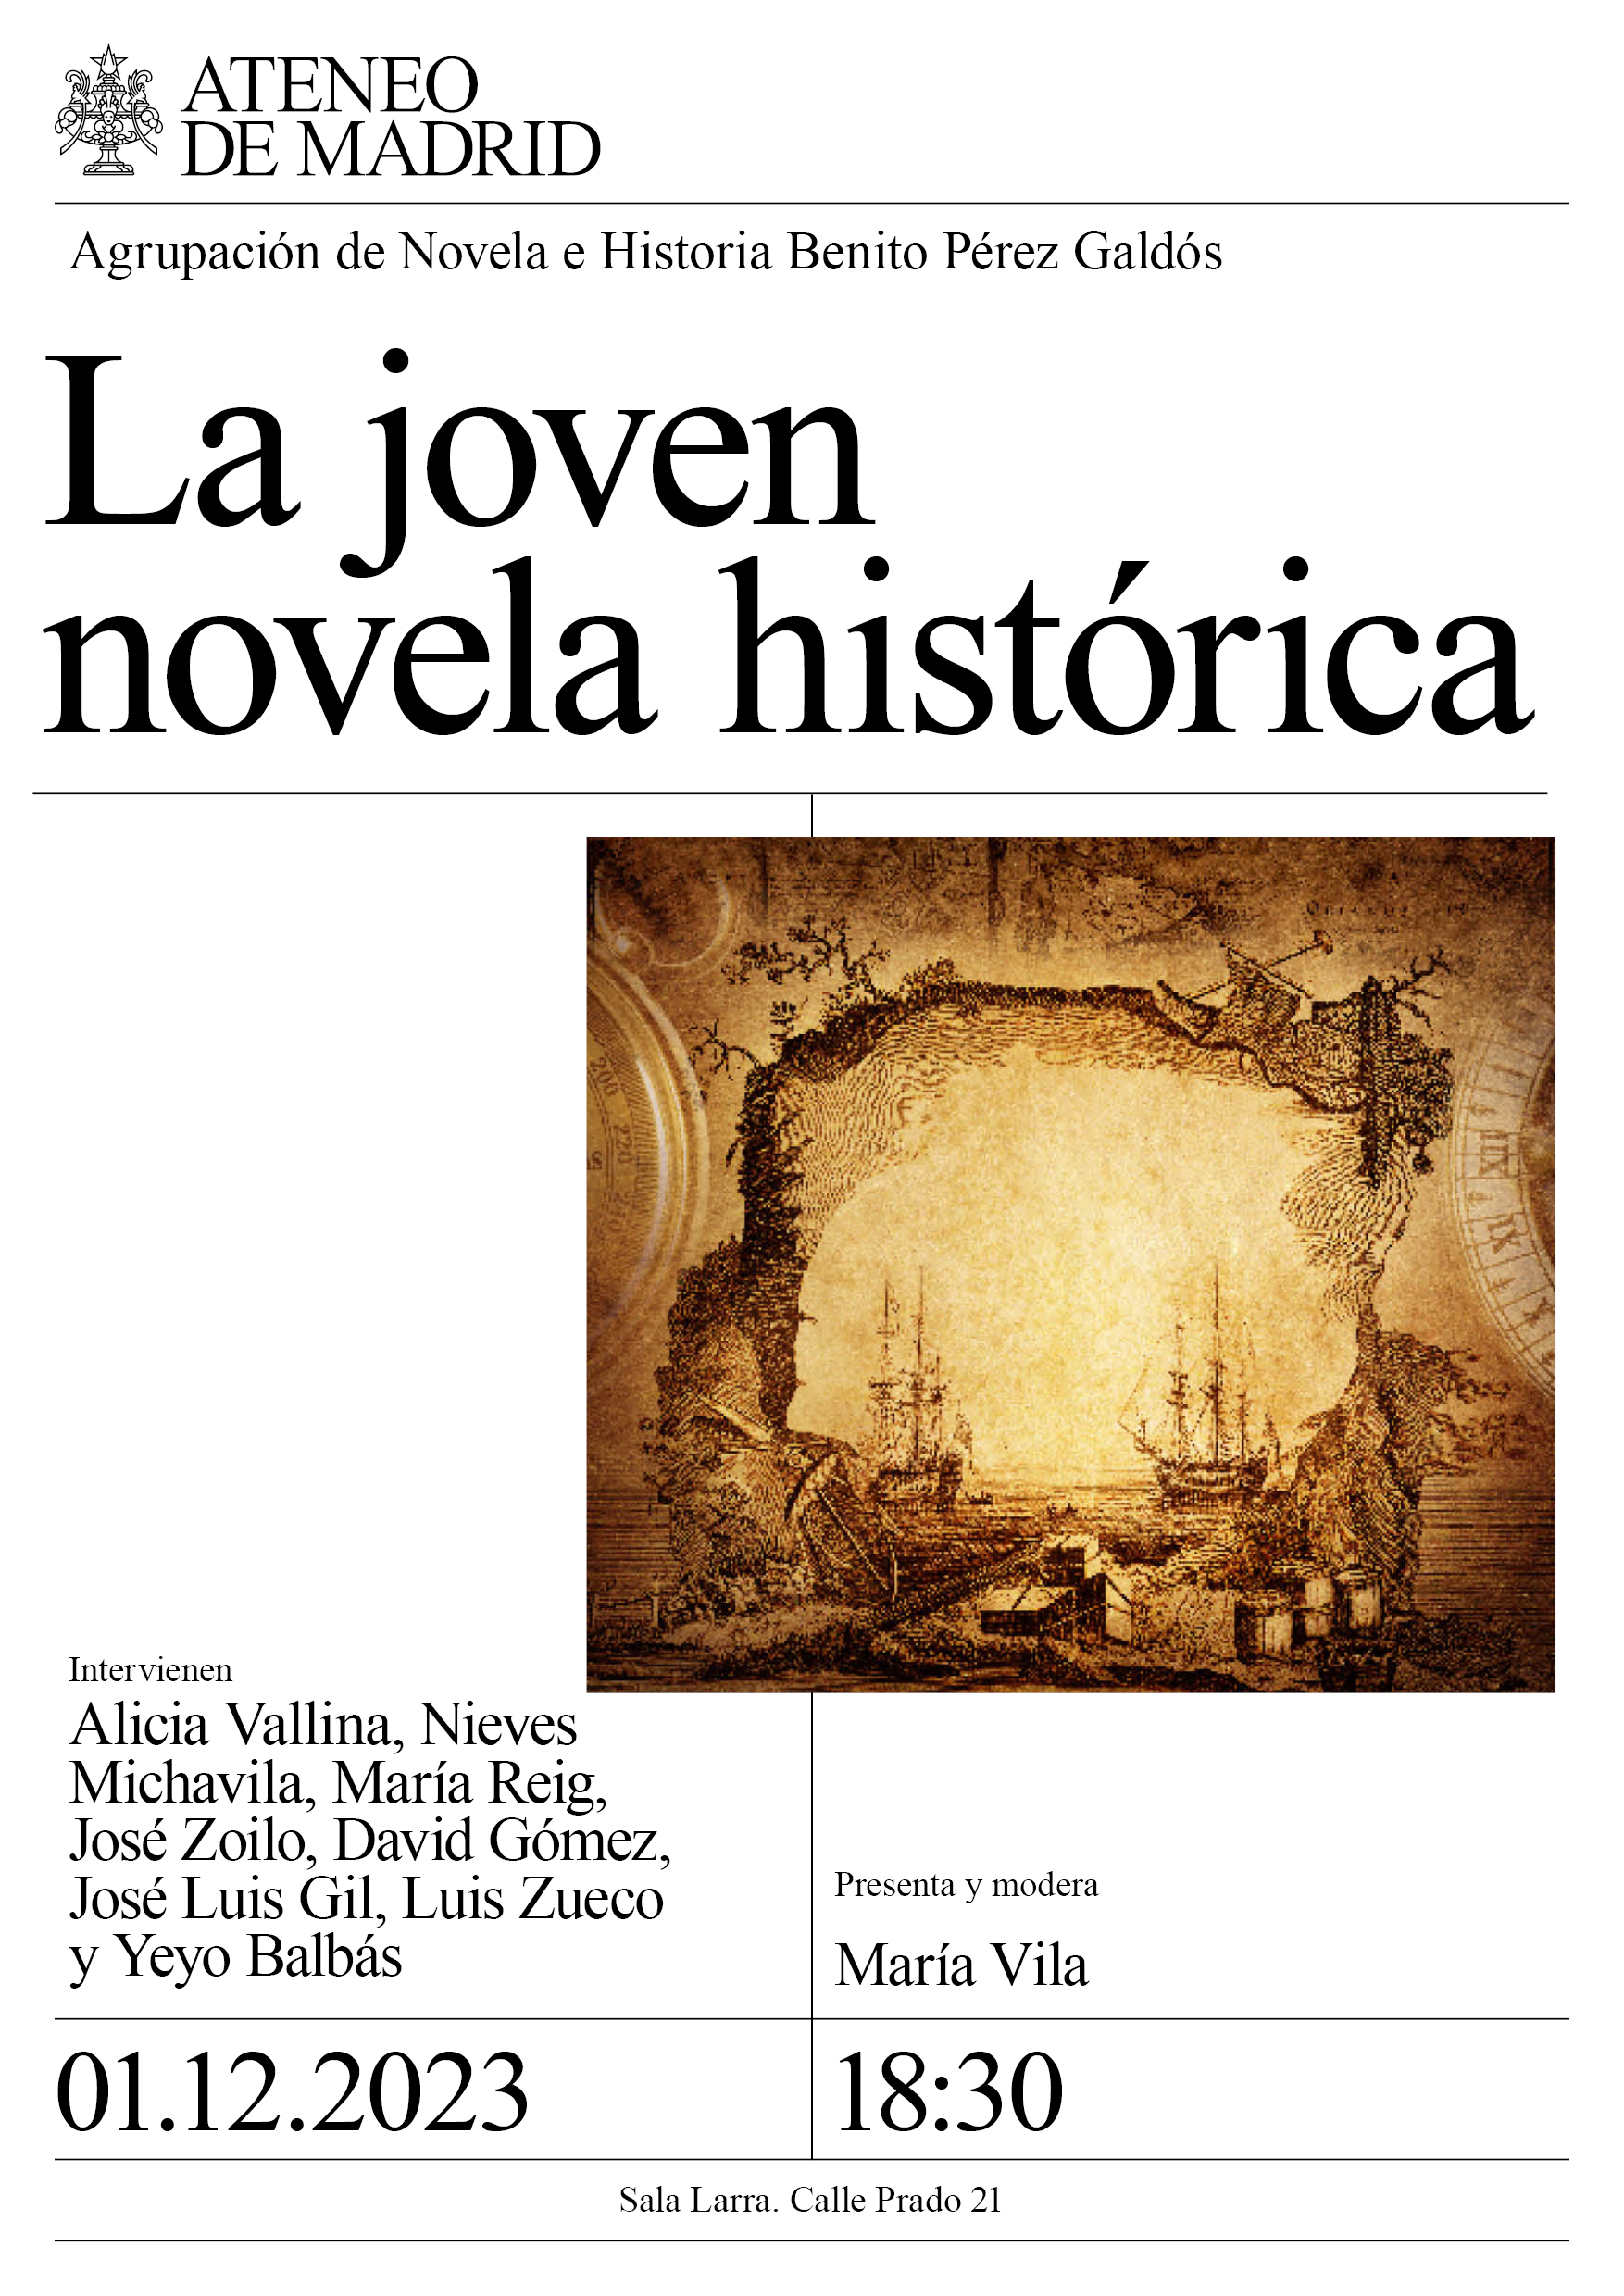 La joven novela histórica - Ateneo Madrid